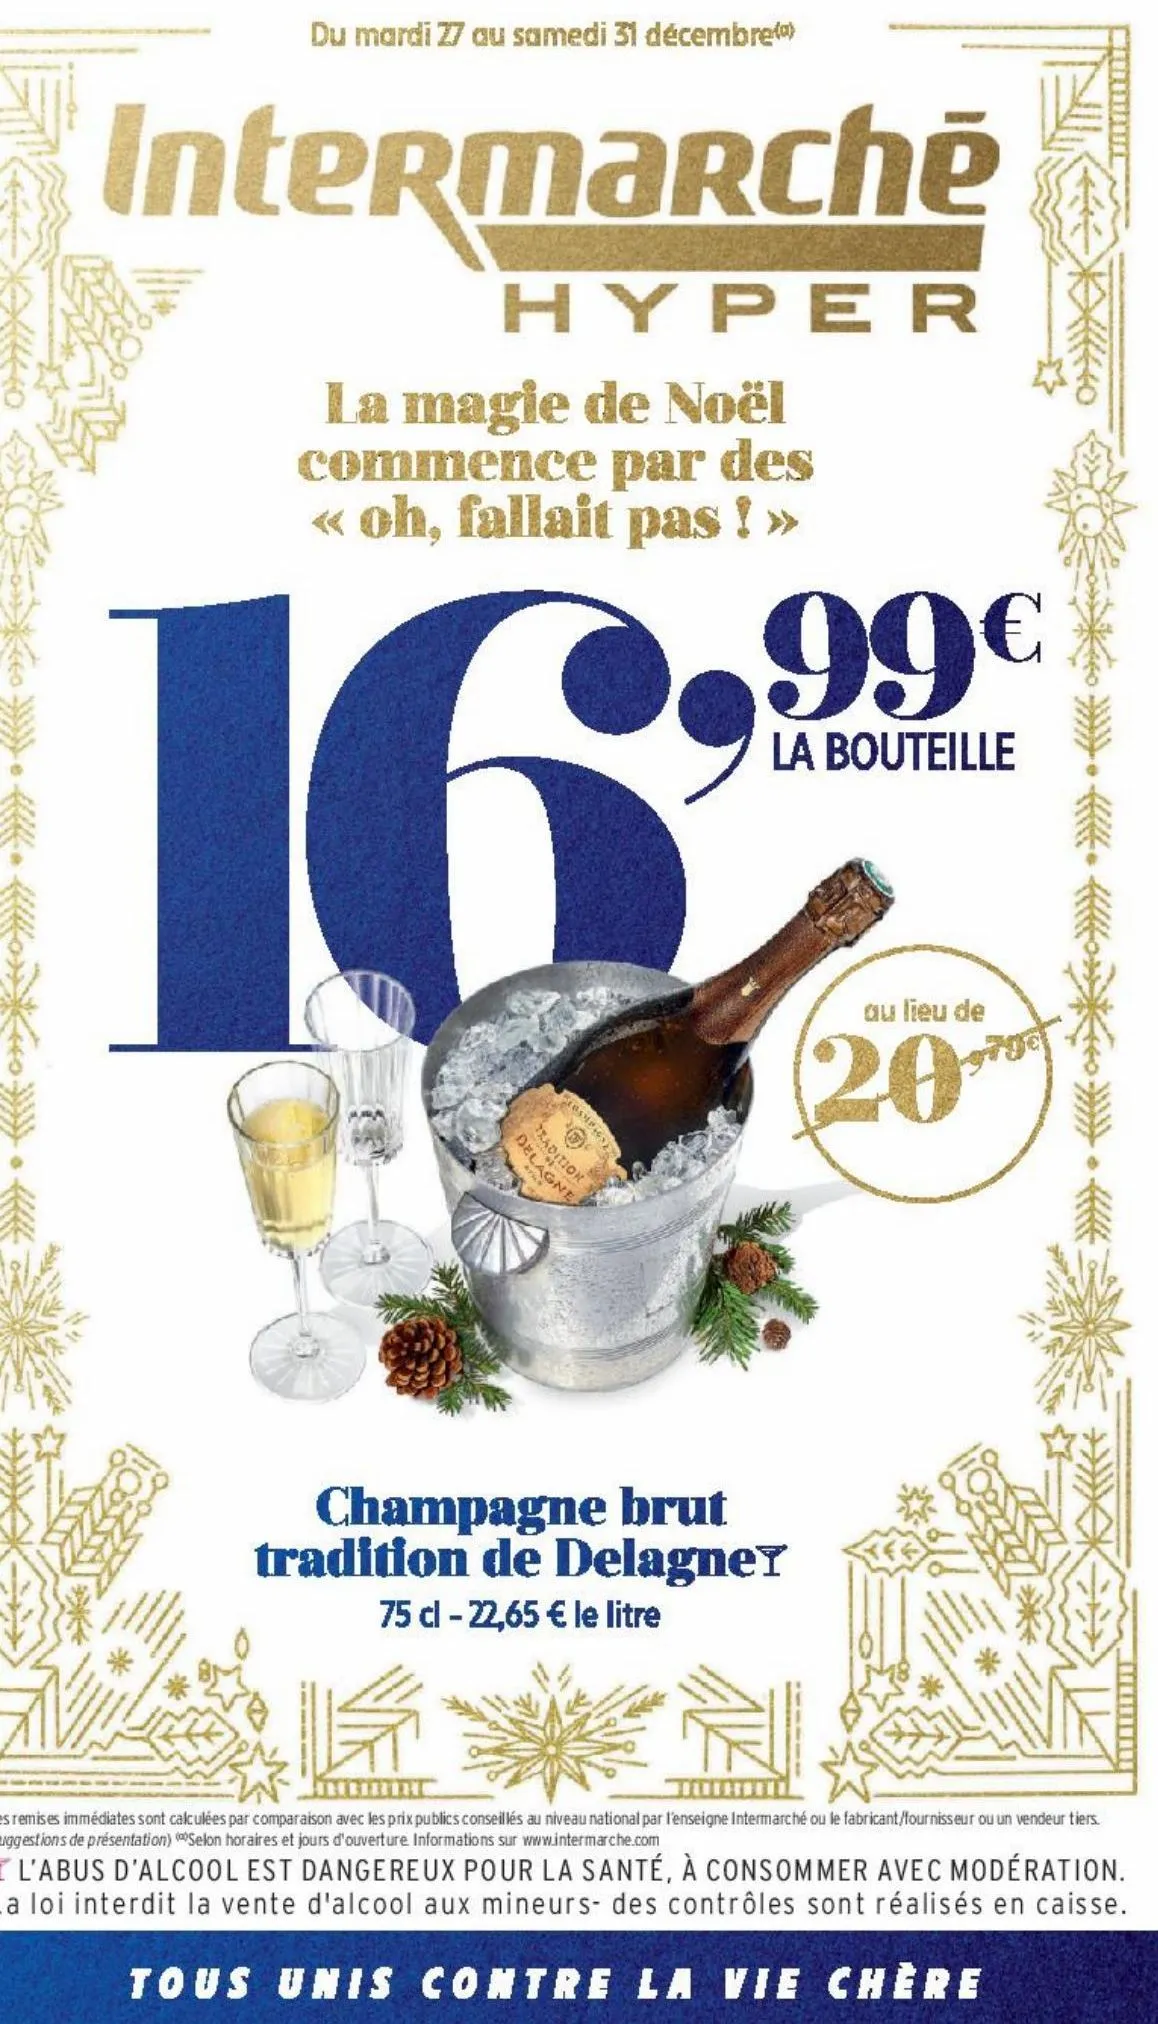 champagne brut tradition de delagne